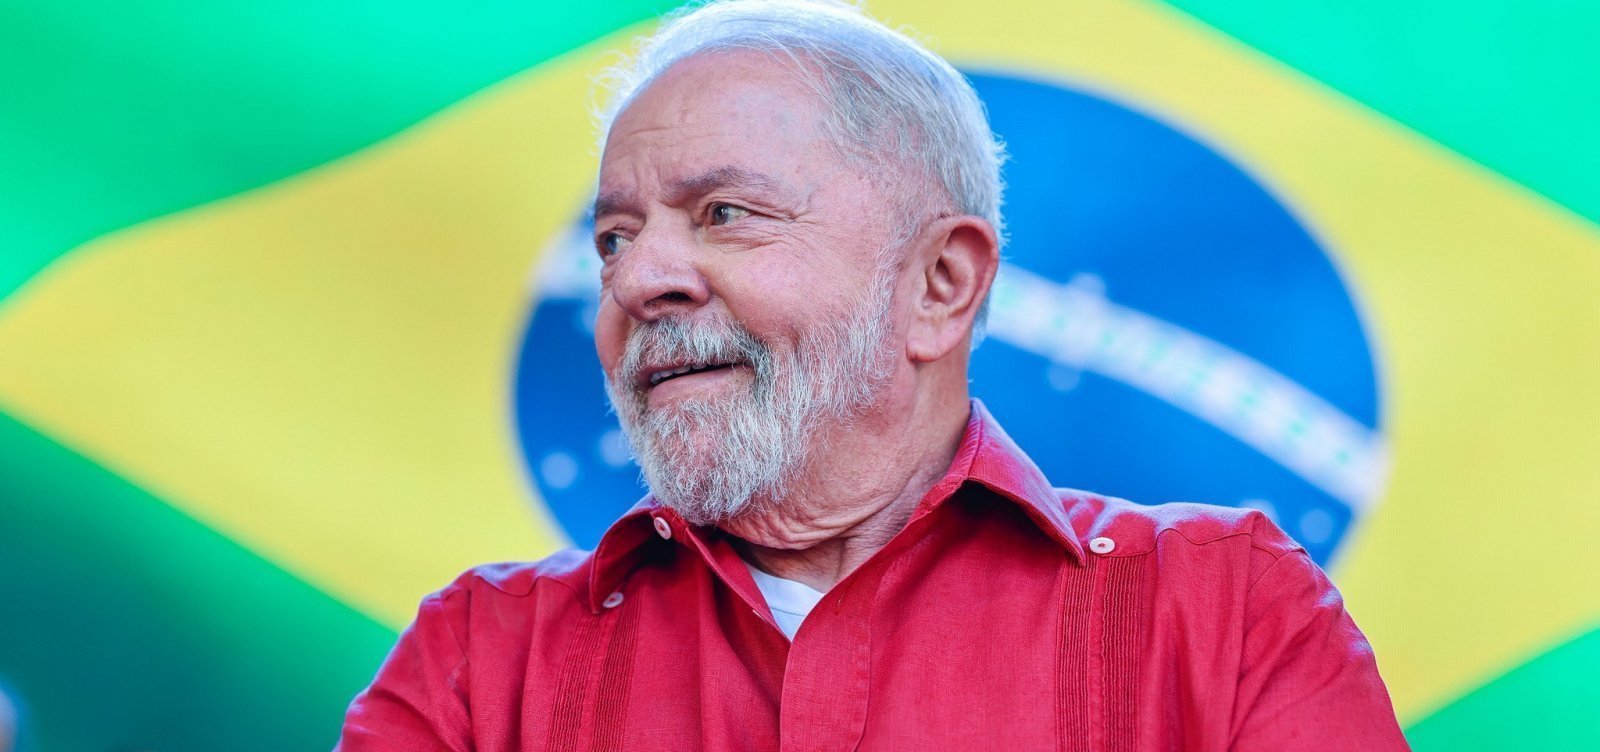 Grupo que representa povo brasileiro deve passar a faixa para Lula diante de recusa de Bolsonaro